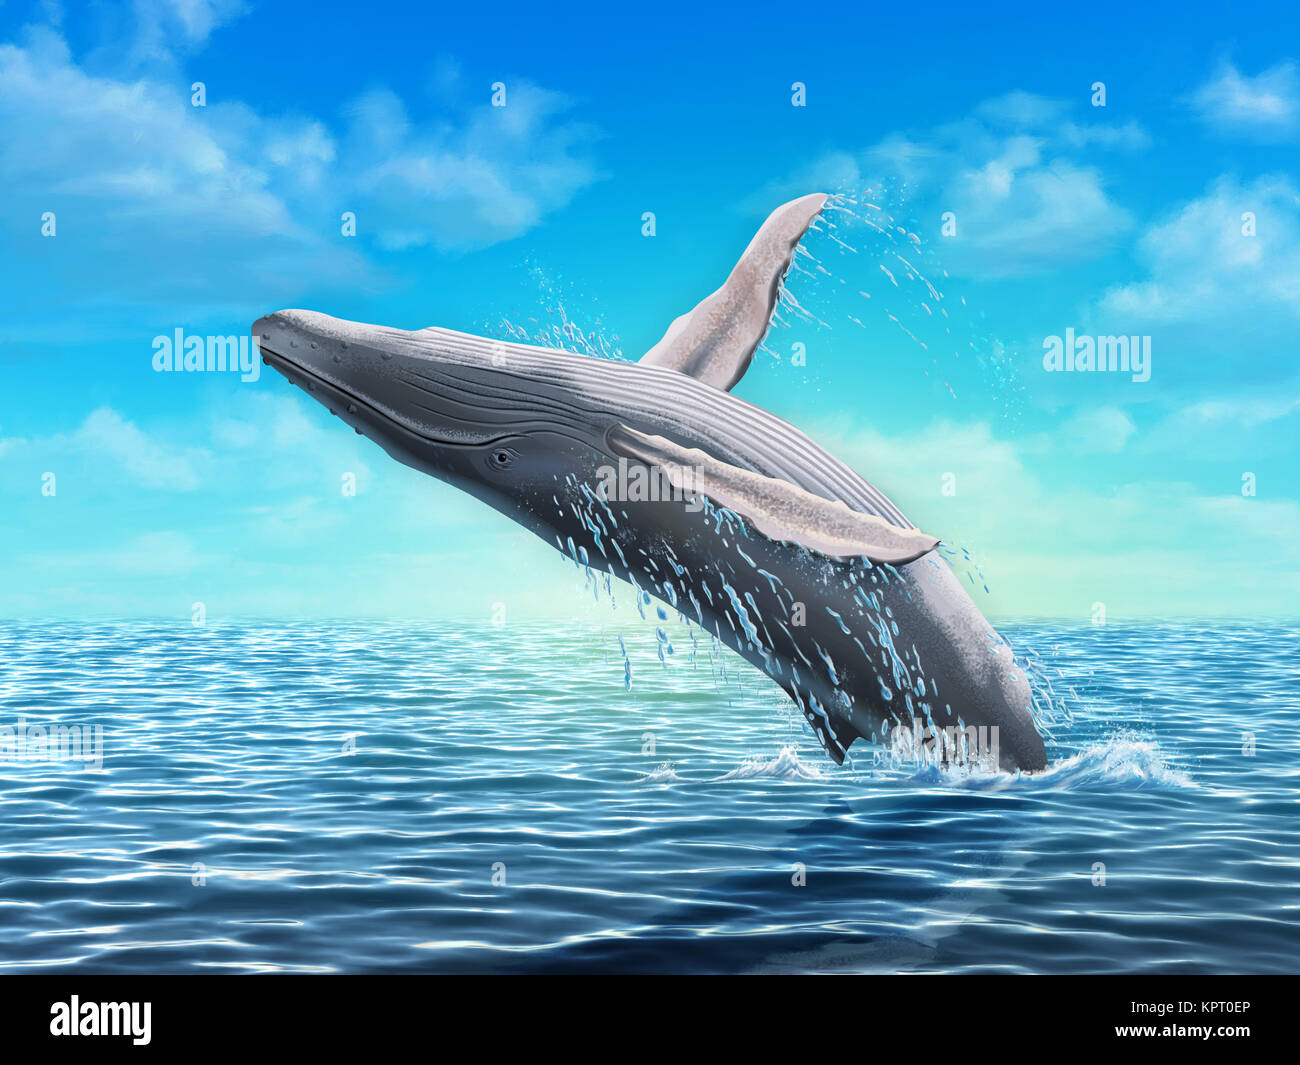 Buckelwal aus dem Wasser springen. Digitale Illustration. Stockfoto